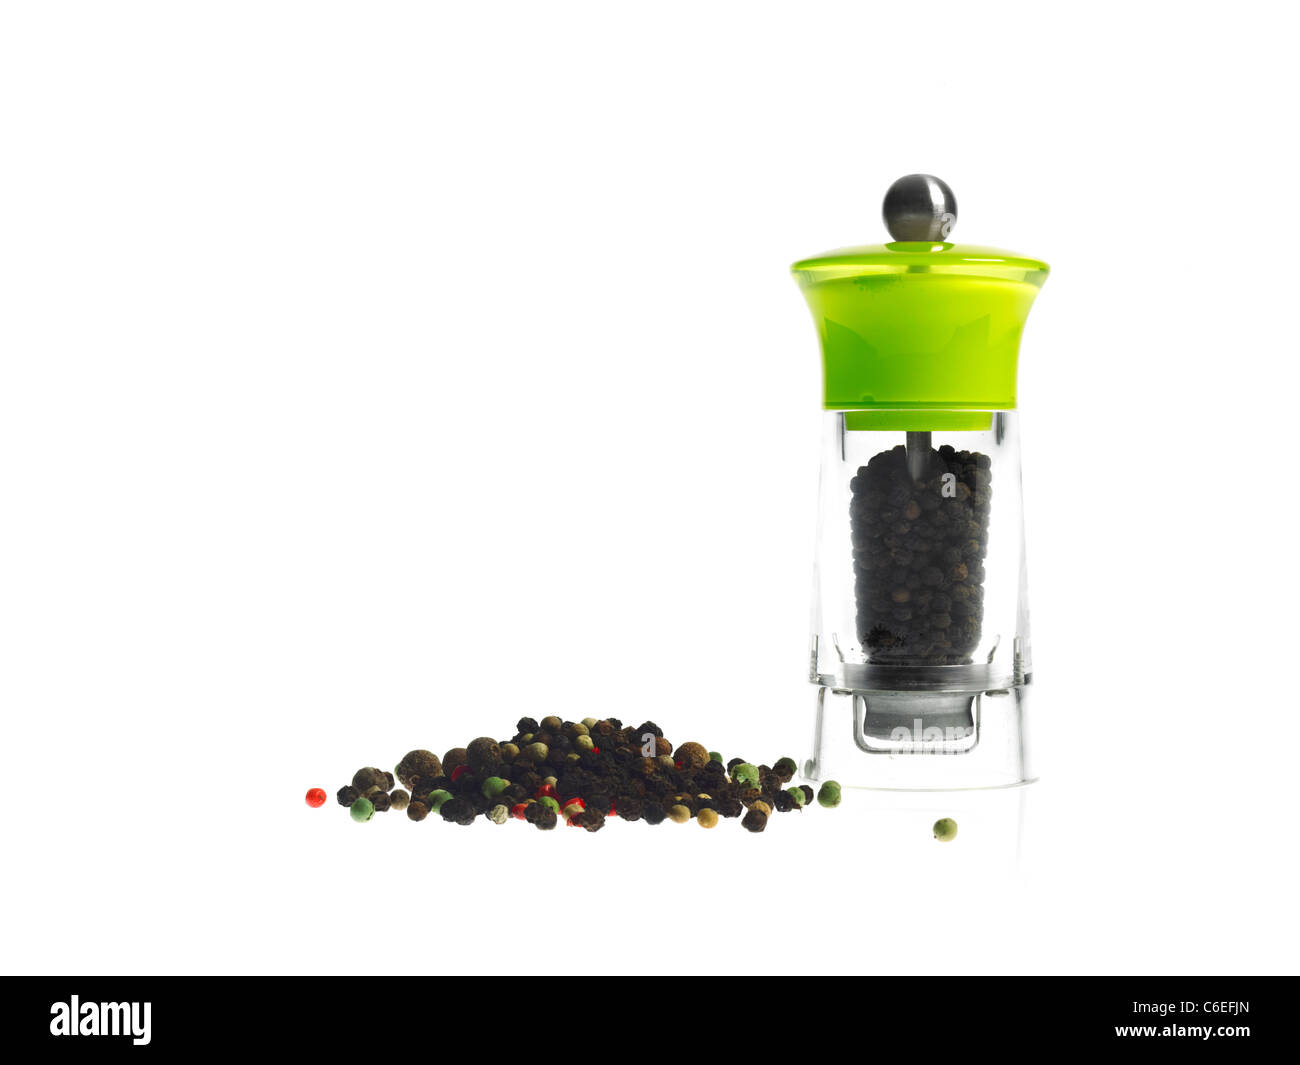 https://c8.alamy.com/comp/C6EFJN/studio-shot-of-pepper-grinder-C6EFJN.jpg